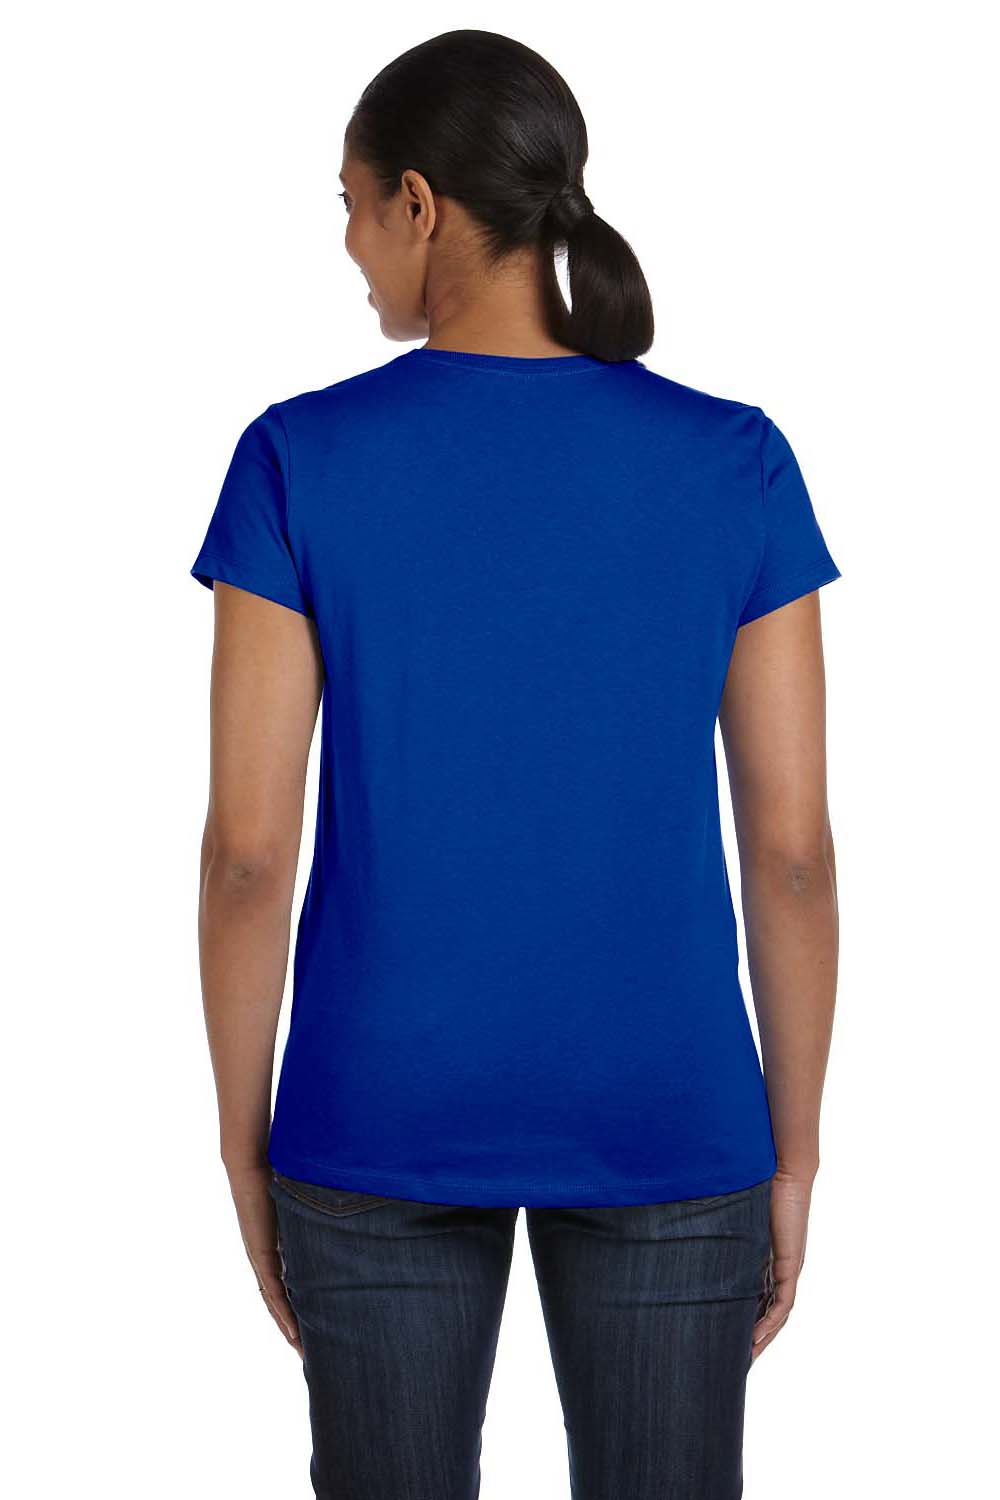 Hanes 5680 Womens ComfortSoft Short Sleeve Crewneck T-Shirt Royal Blue Back